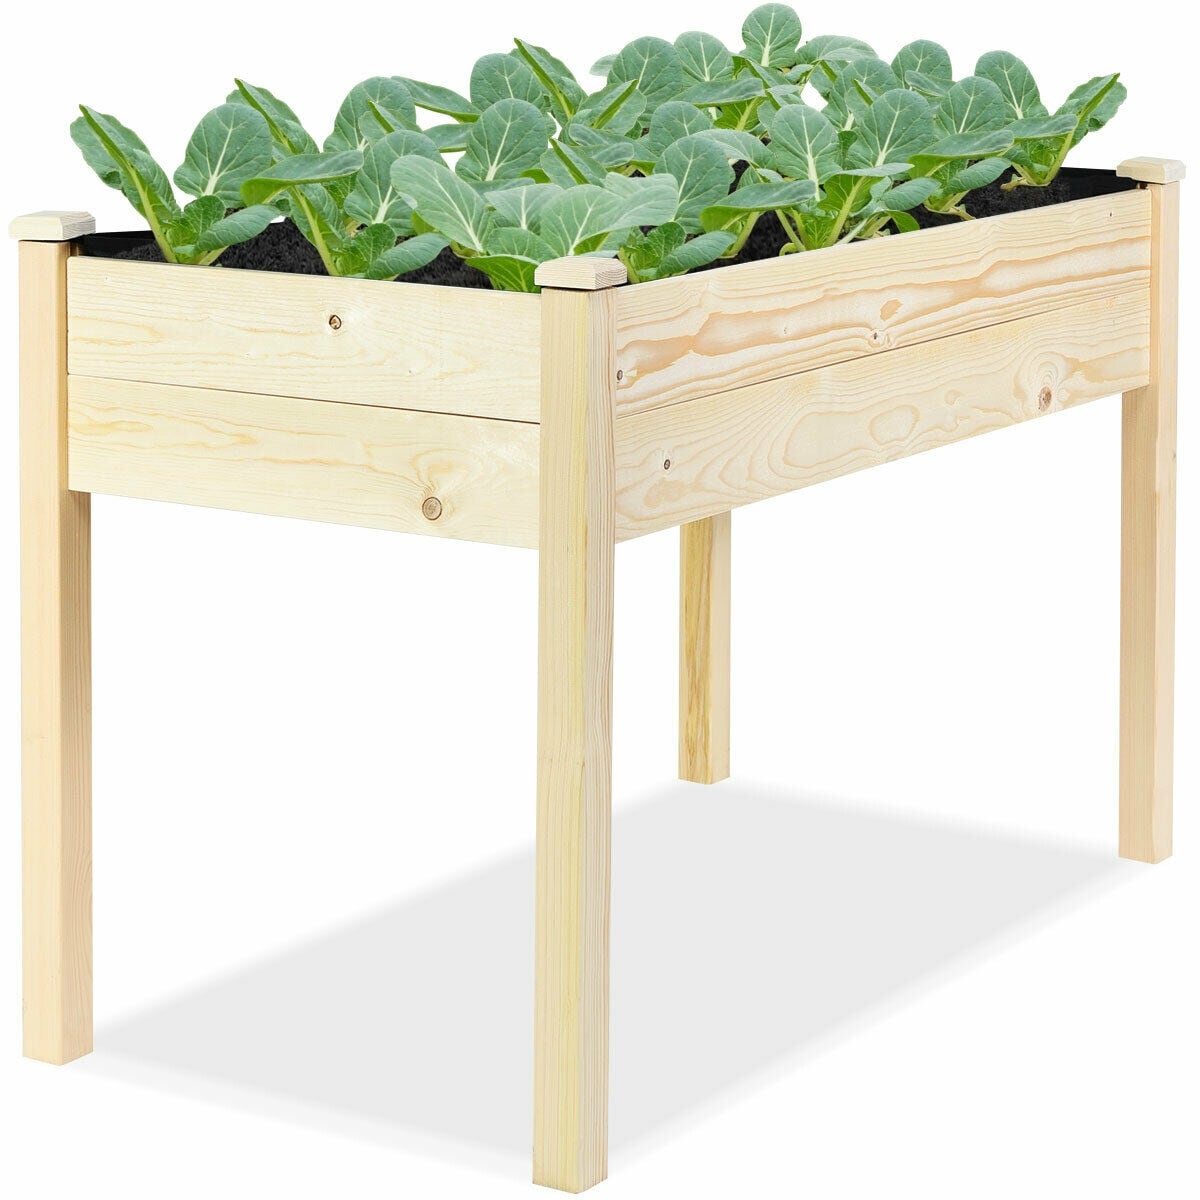 Shop Wooden Raised Vegetable Garden Bed Elevated Grow Vegetable